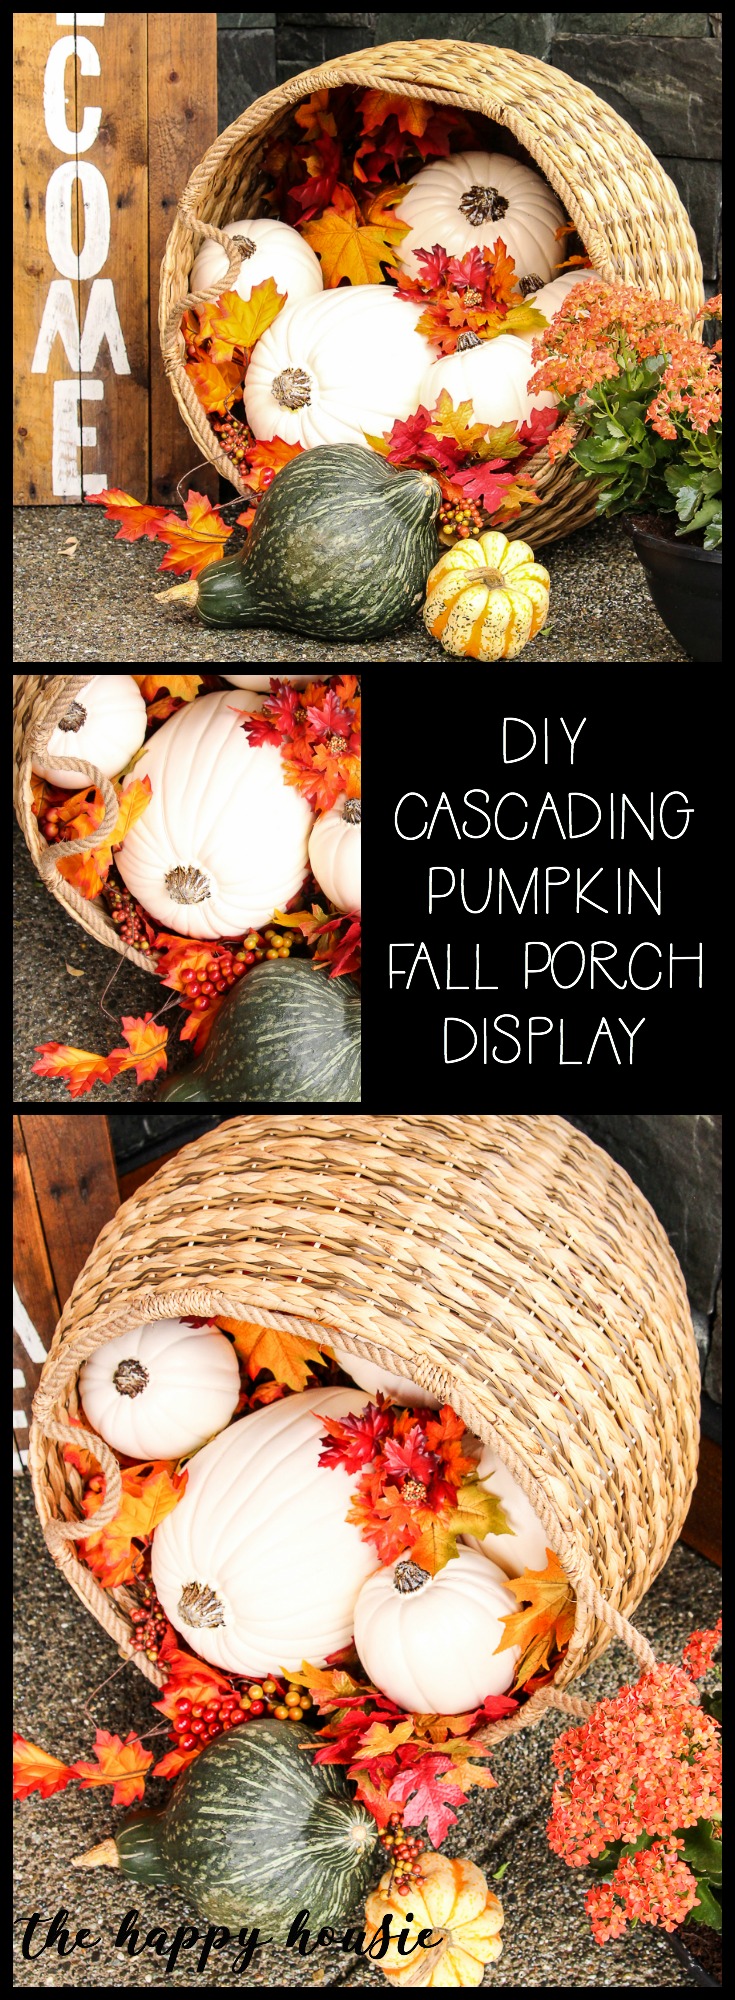 DIY Cascading Pumpkin Fall Porch Display poster.